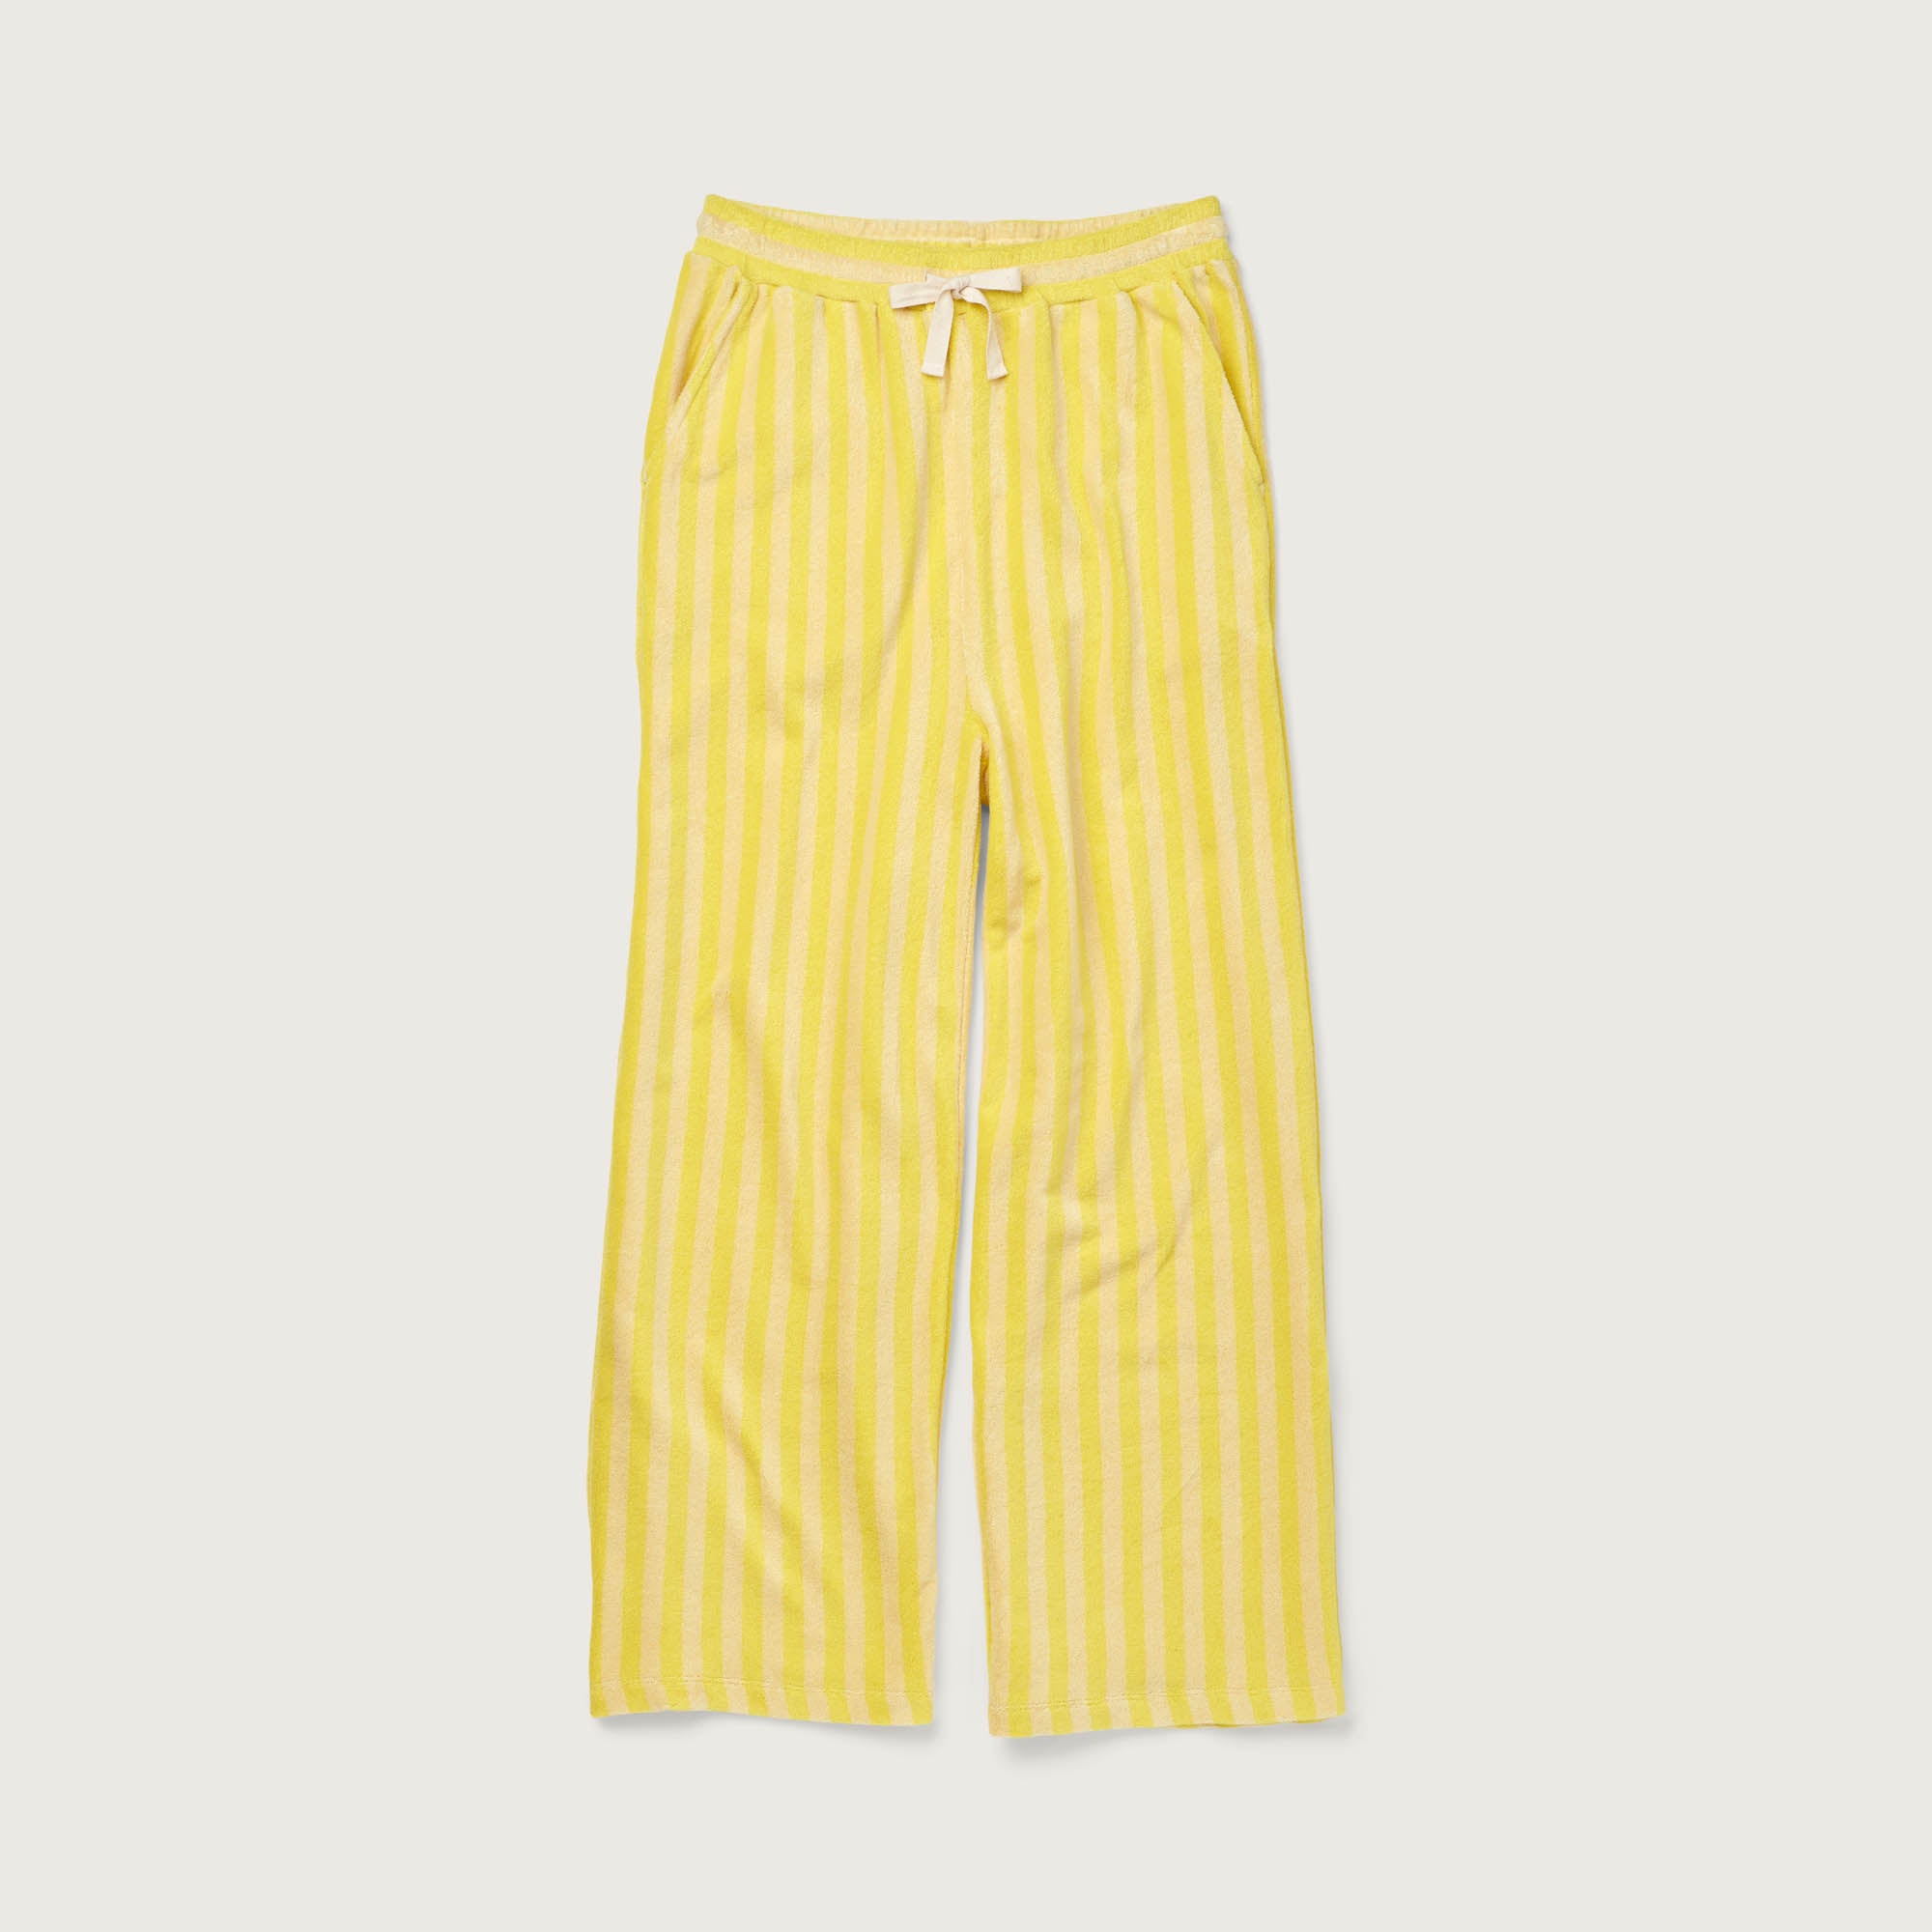 Bongusta, Product image, Naram Pants, pristine & neon yellow, 3 of 3}